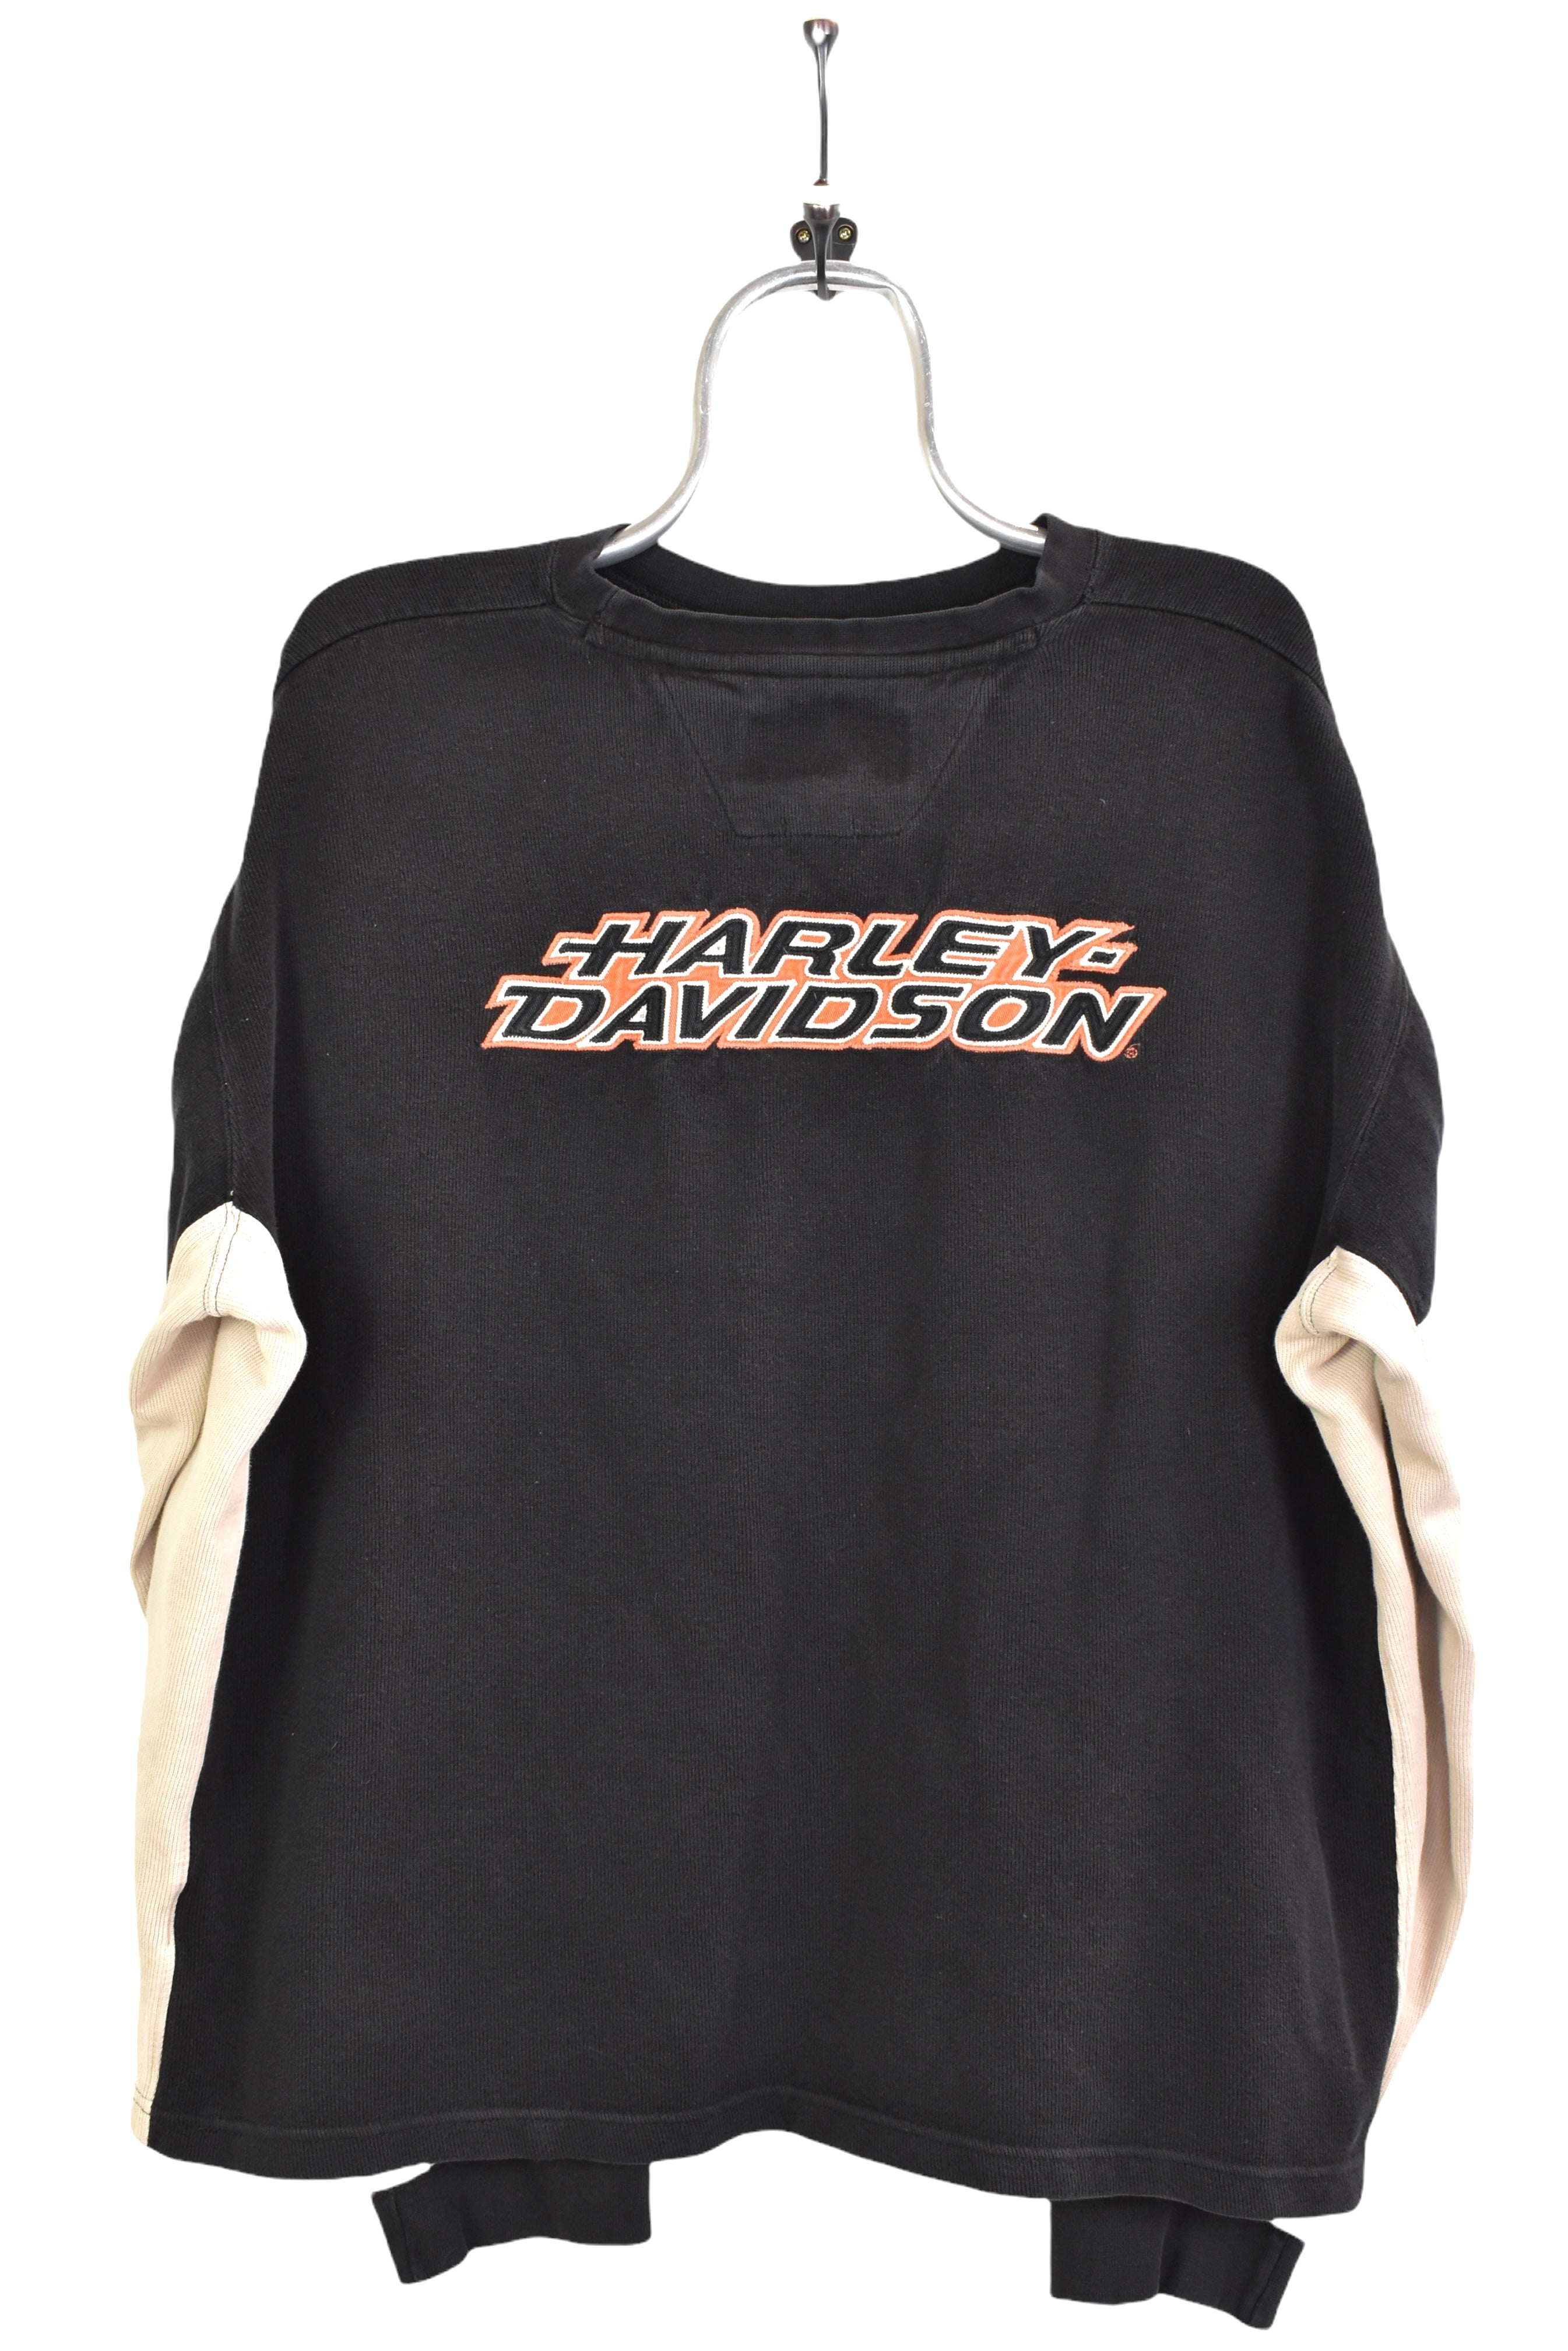 Vintage Women's Harley Davidson embroidered black sweatshirt | XL HARLEY DAVIDSON